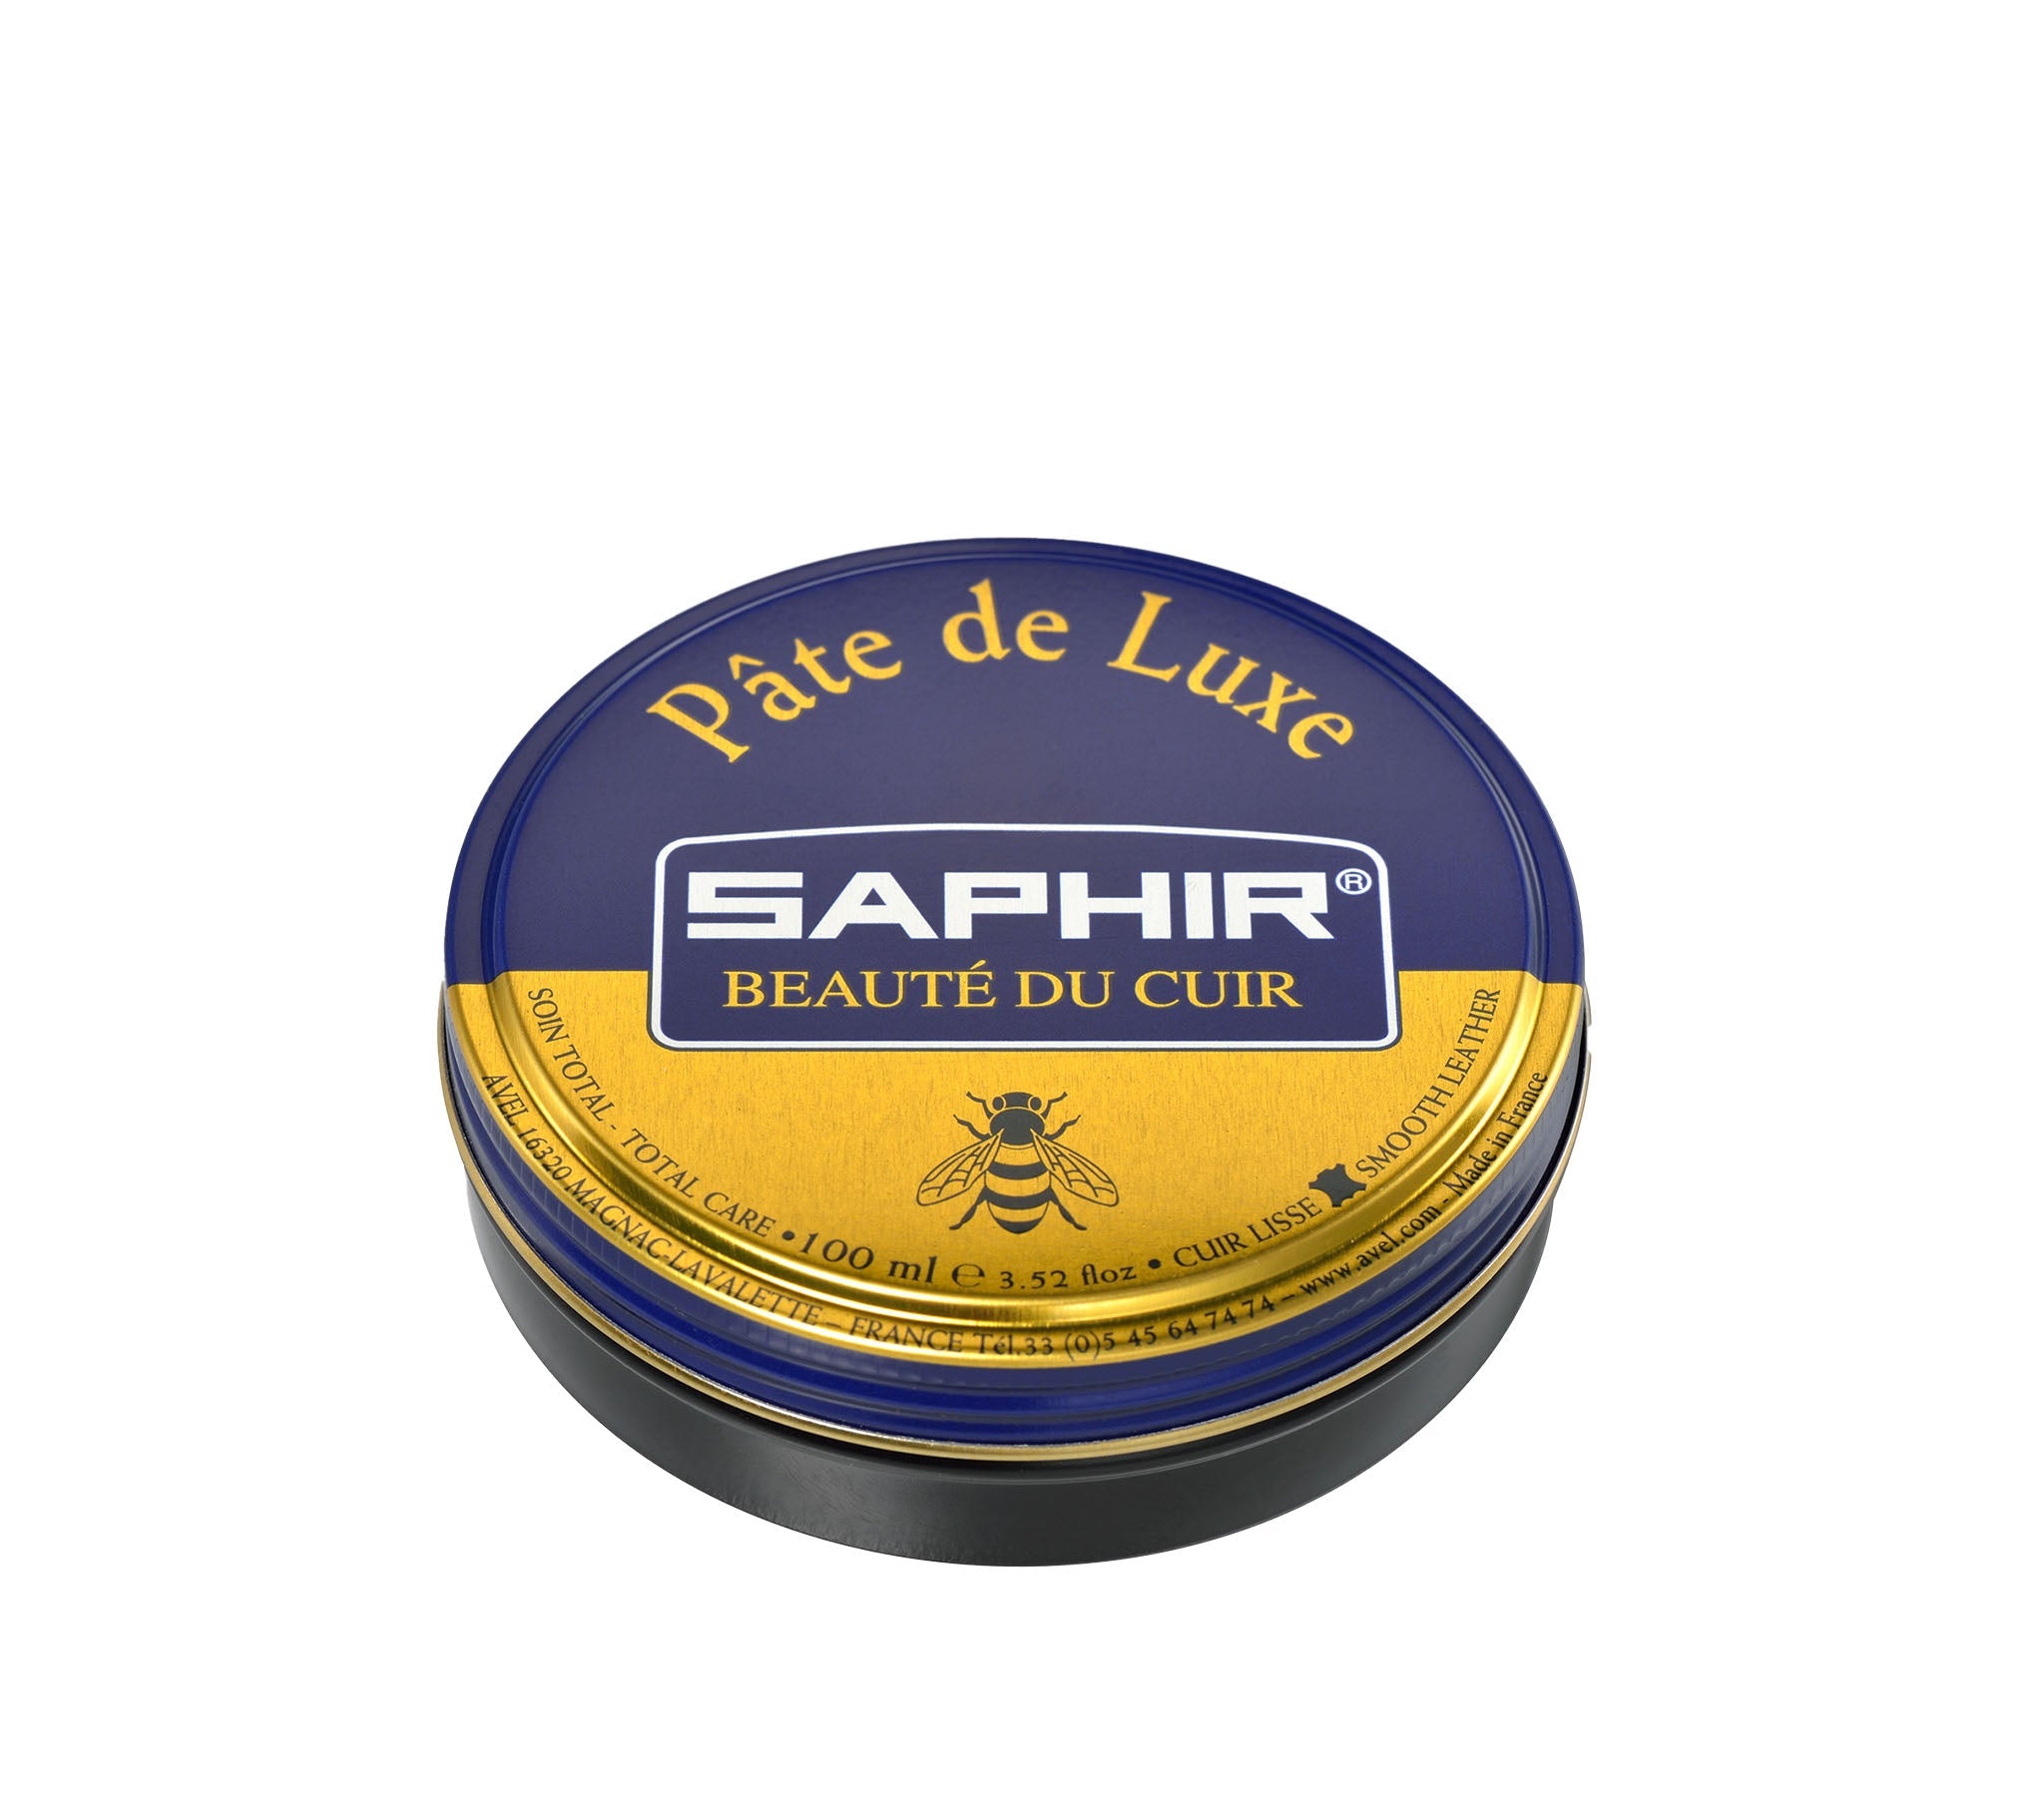 Saphir Beaute du Cuir - Pâte de Luxe - Wax Polish